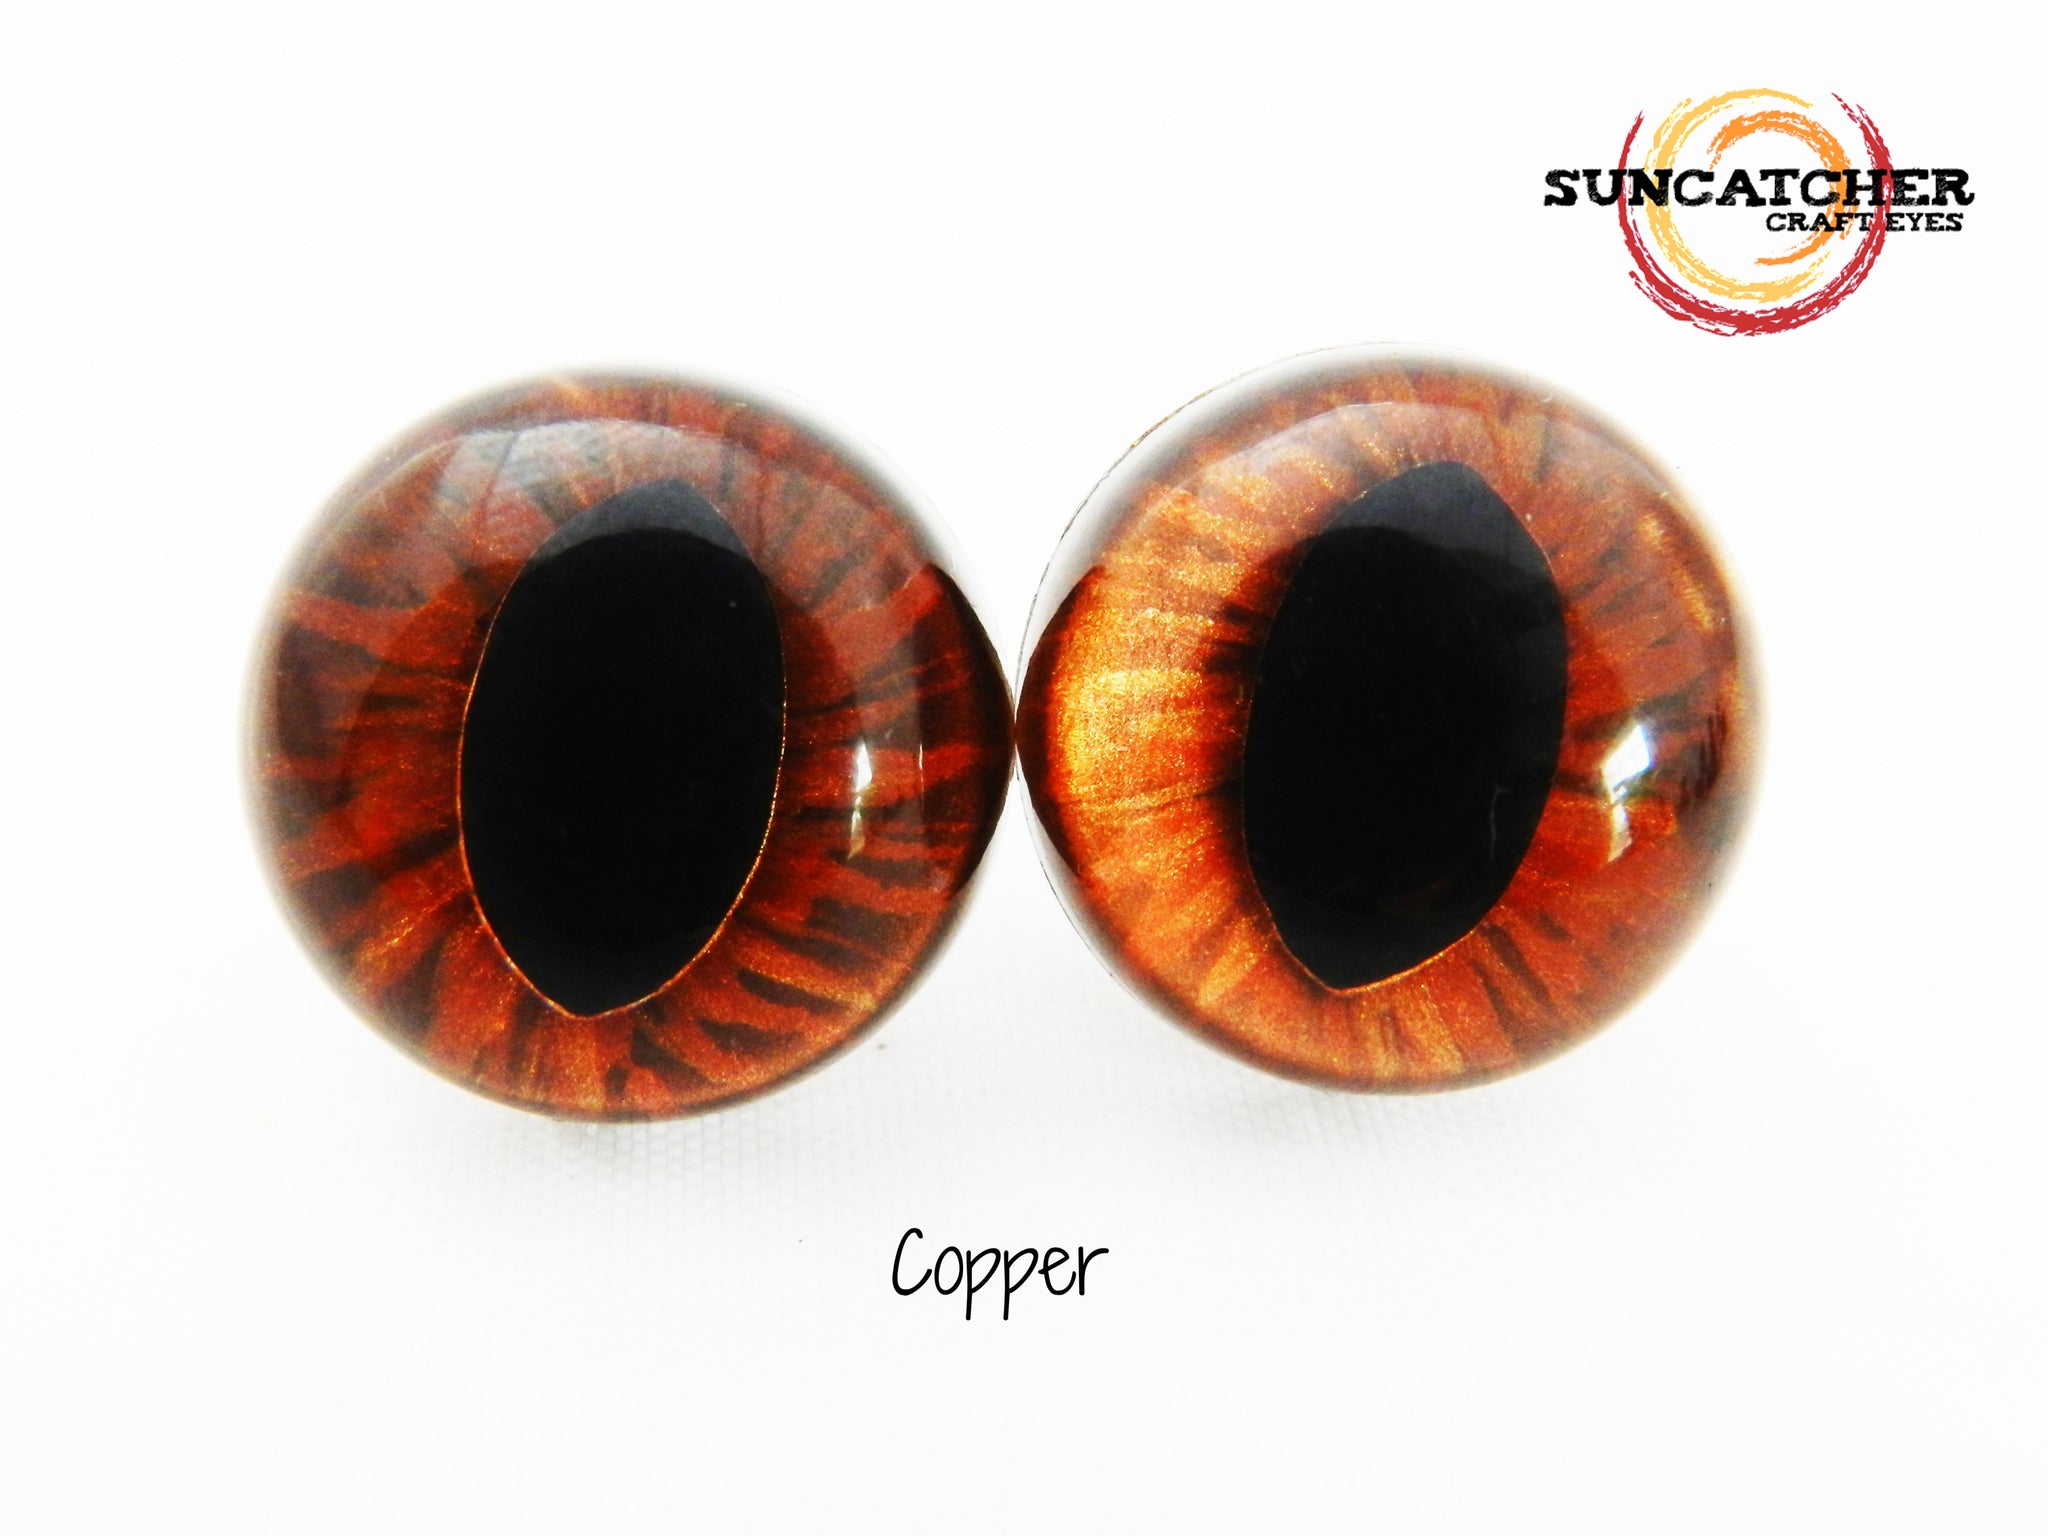 Buy Glass Eyes, Brown Eyes, Fox Eyes, Cat Eyes, Dragon Eyes, Creature Eyes,  Eyes for Sculptures, Crafts, Etc. One Pair Choose Size From Menu. Online in  India 